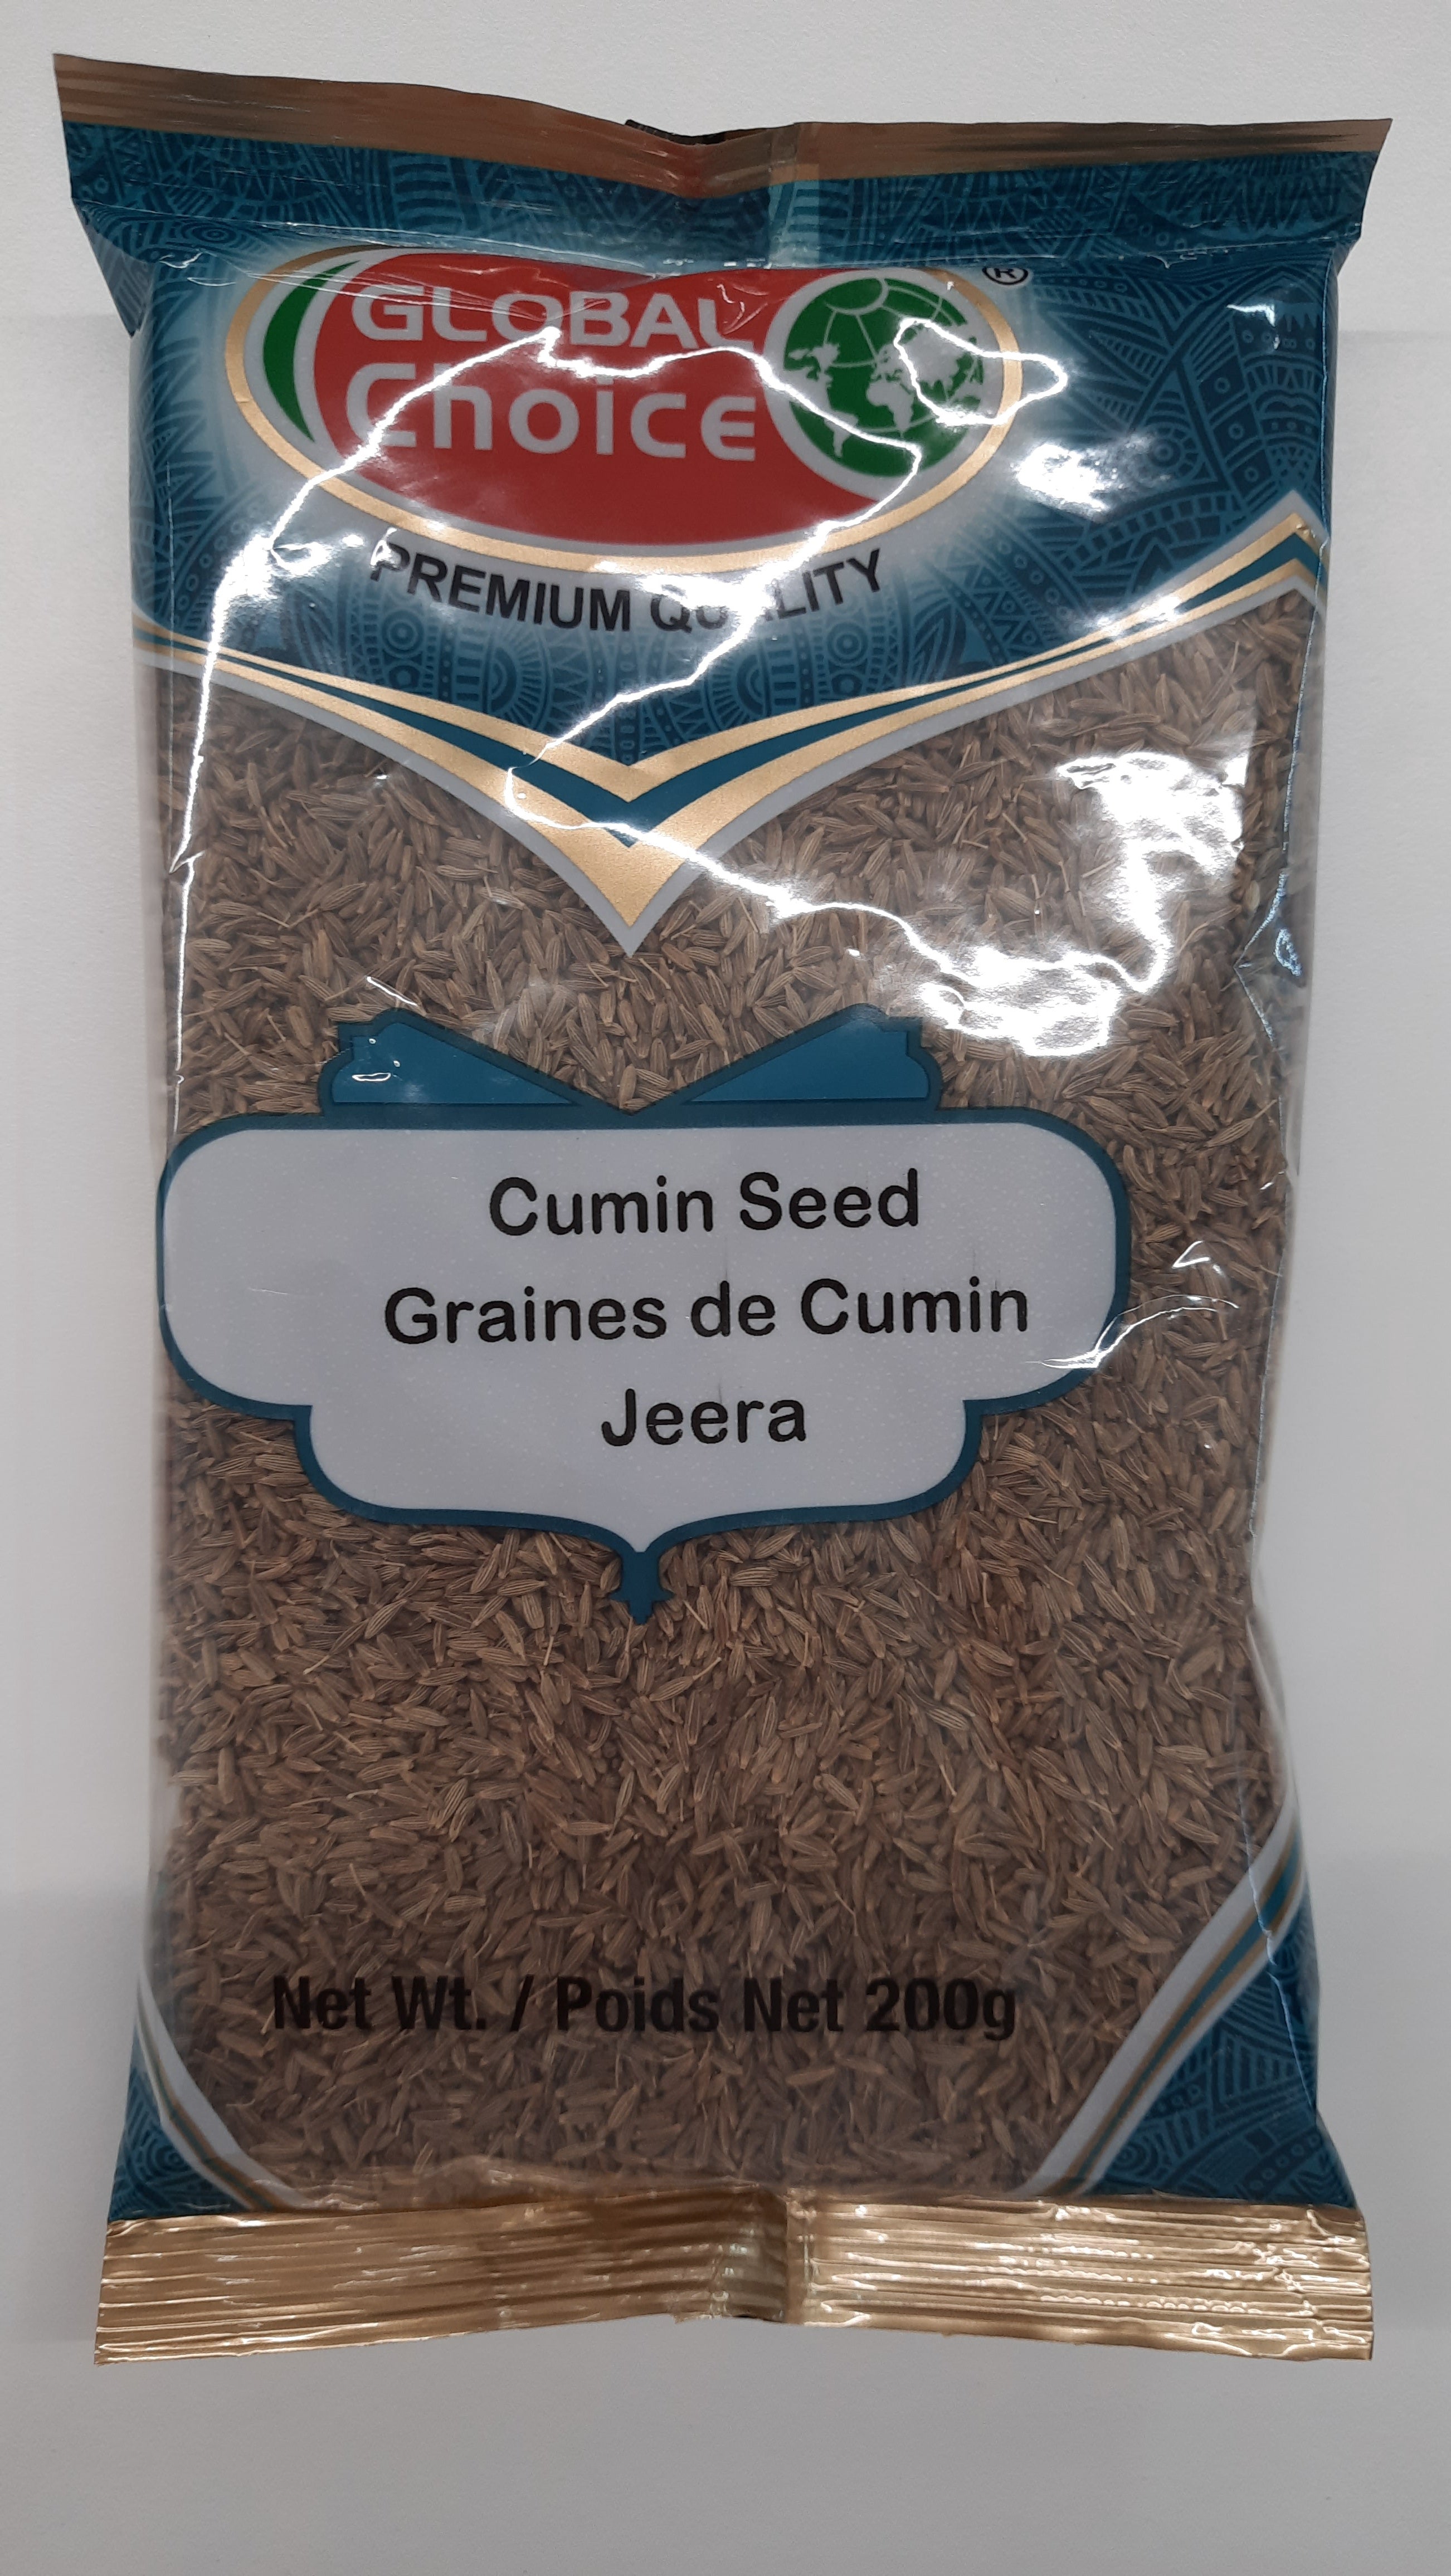 Global Choice - Cumin Seeds 200g